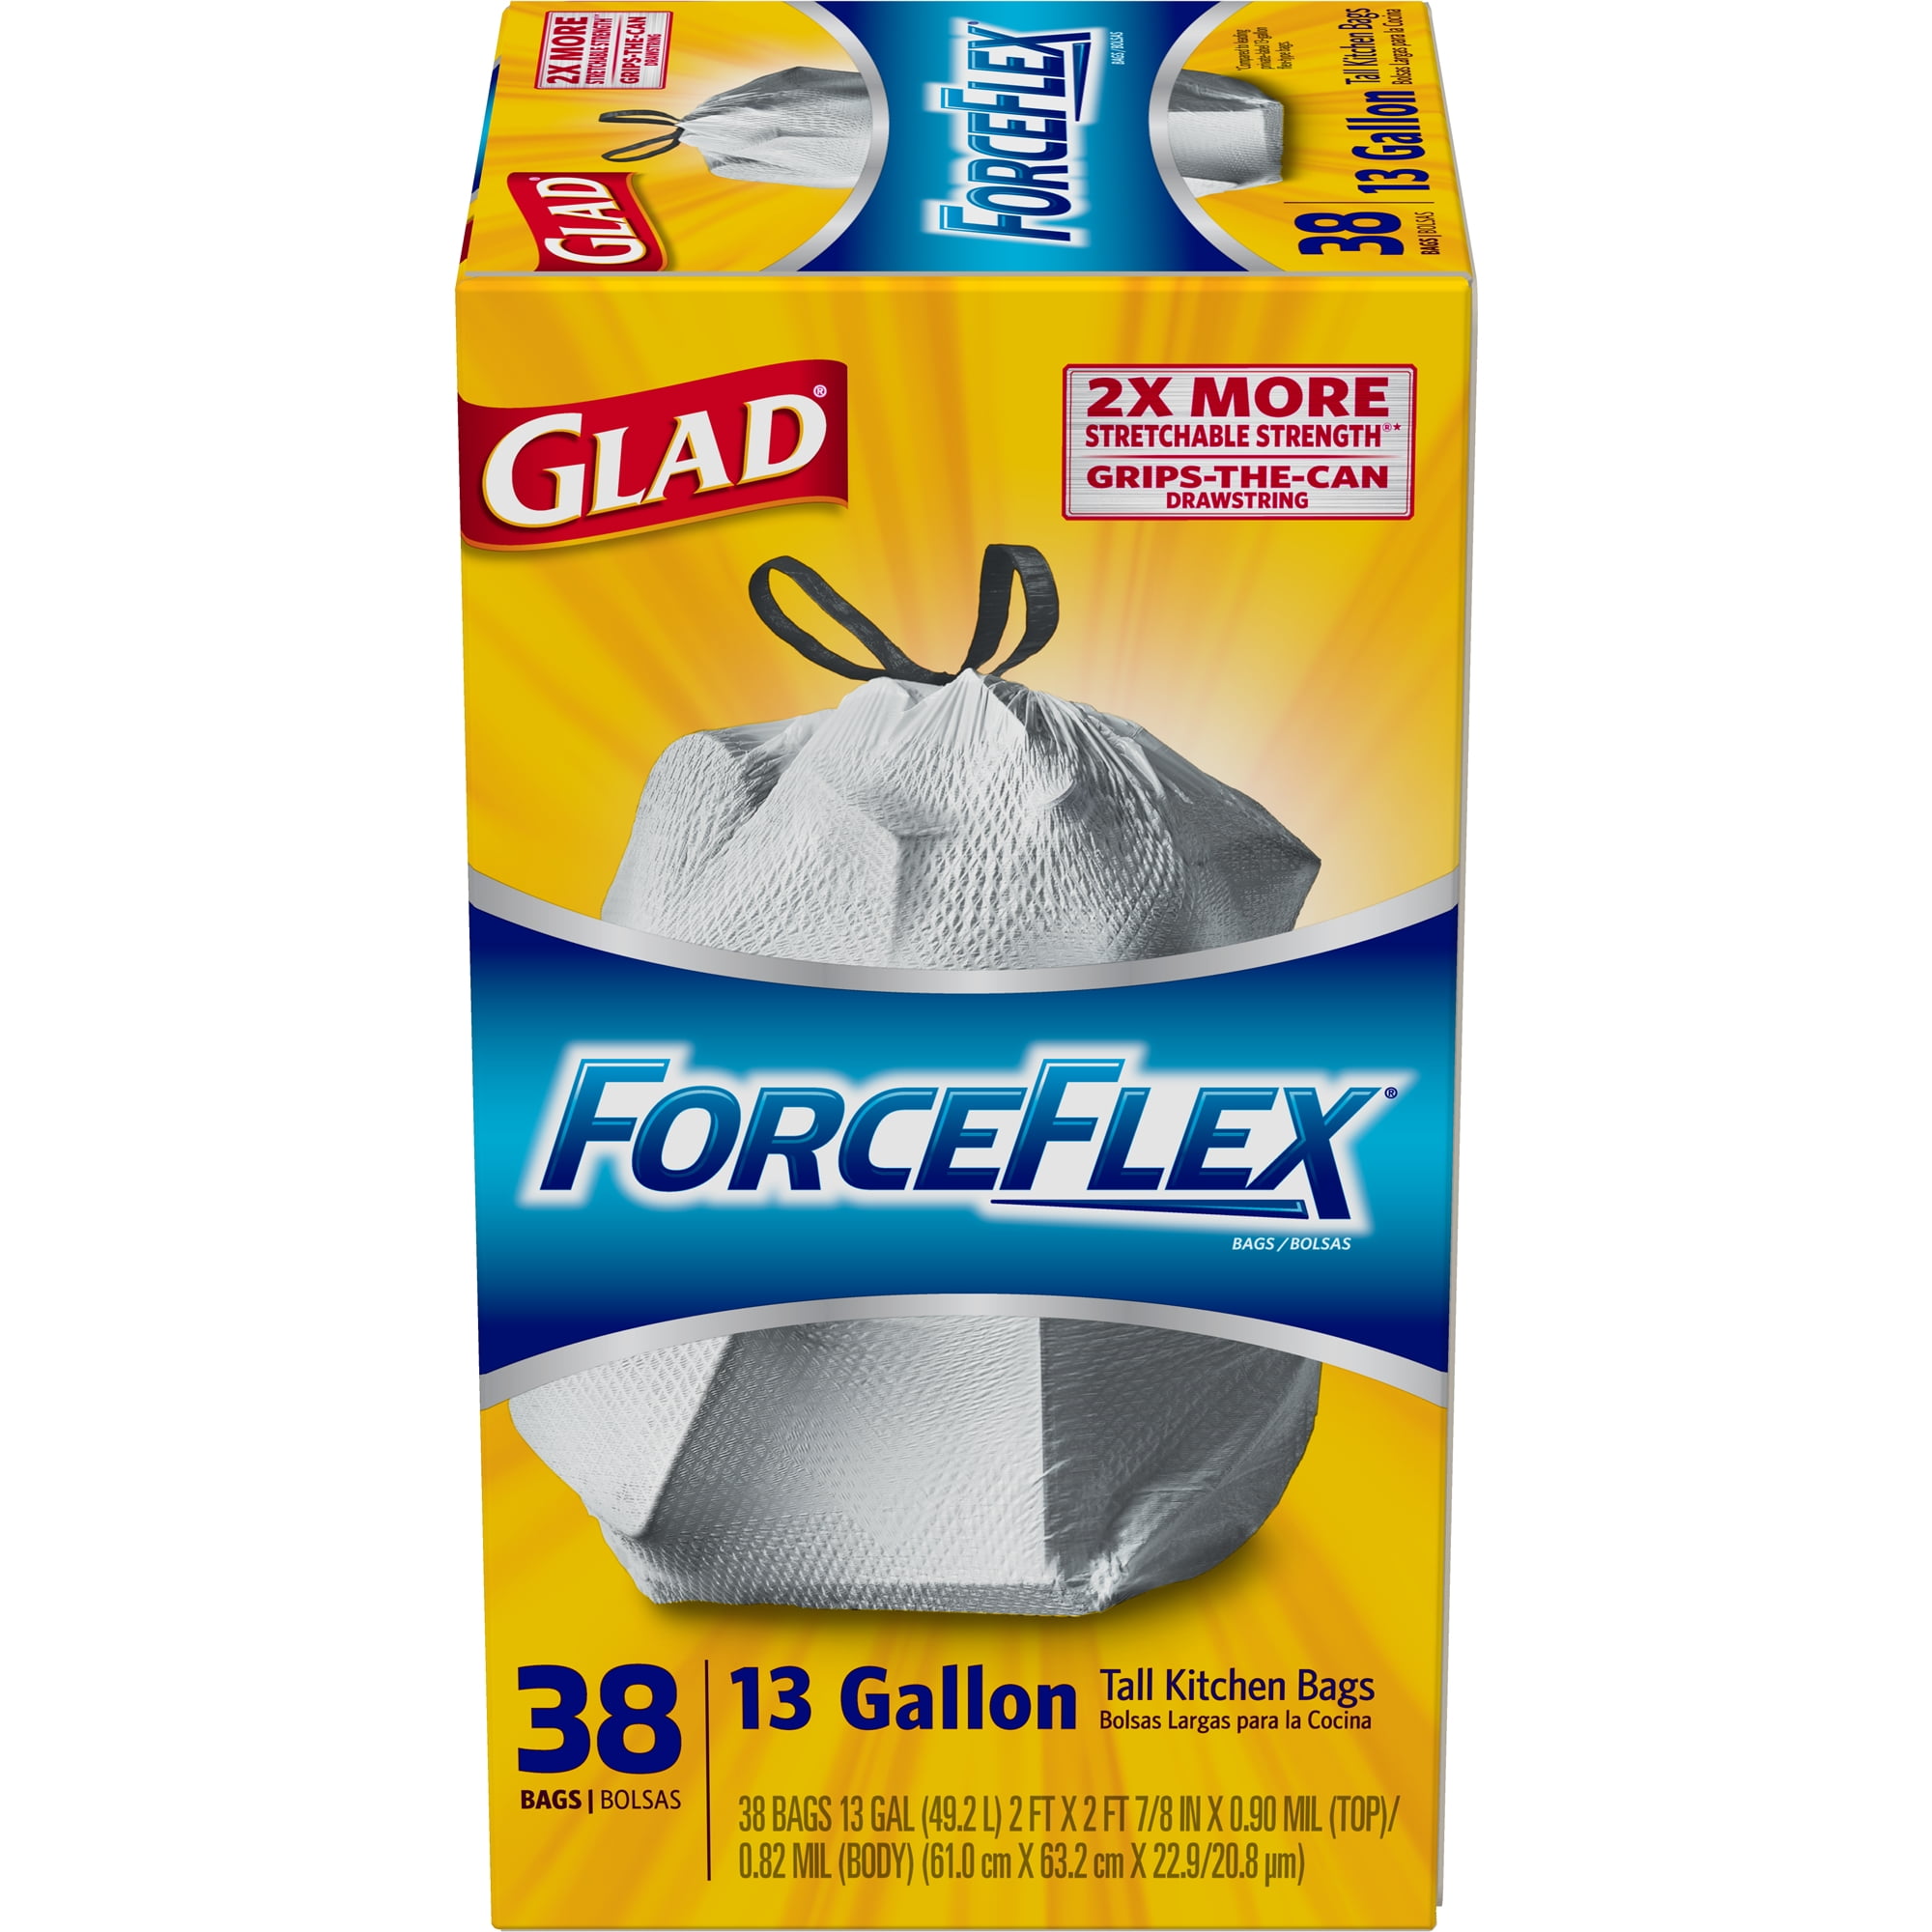 Details about   Glad ForceFlex Tall Kitchen Trash Bags Gain Original Scent 13 Gallon 40 Bags 